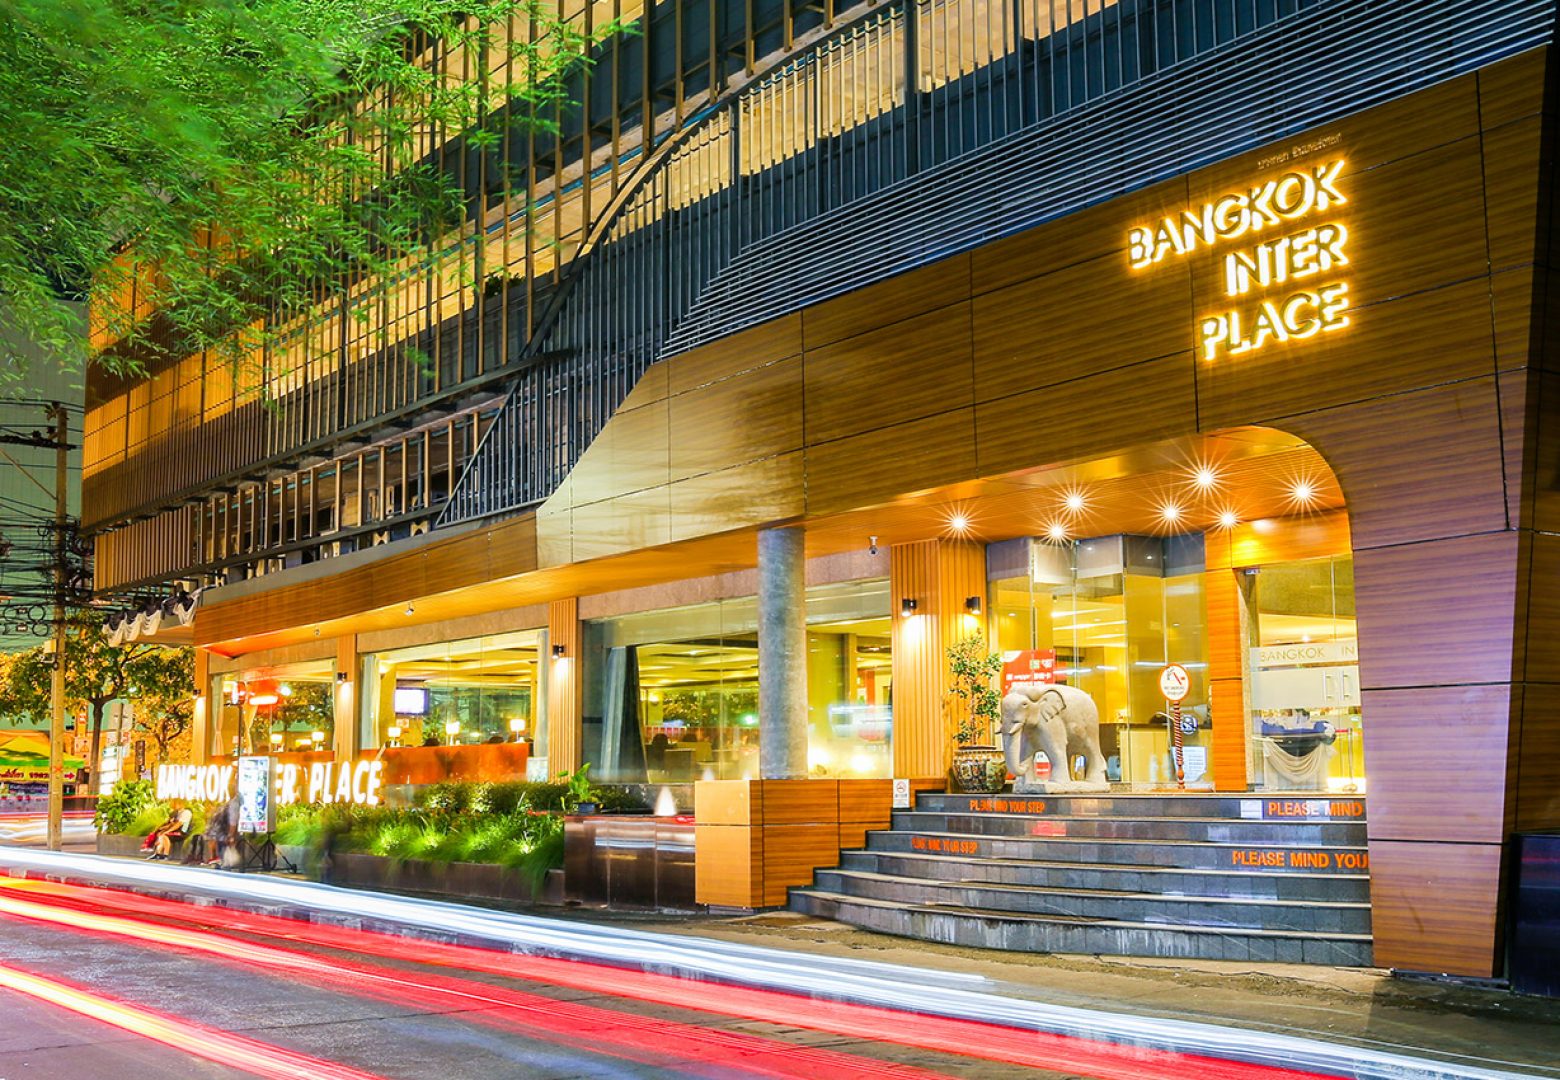 Bangkok inter place